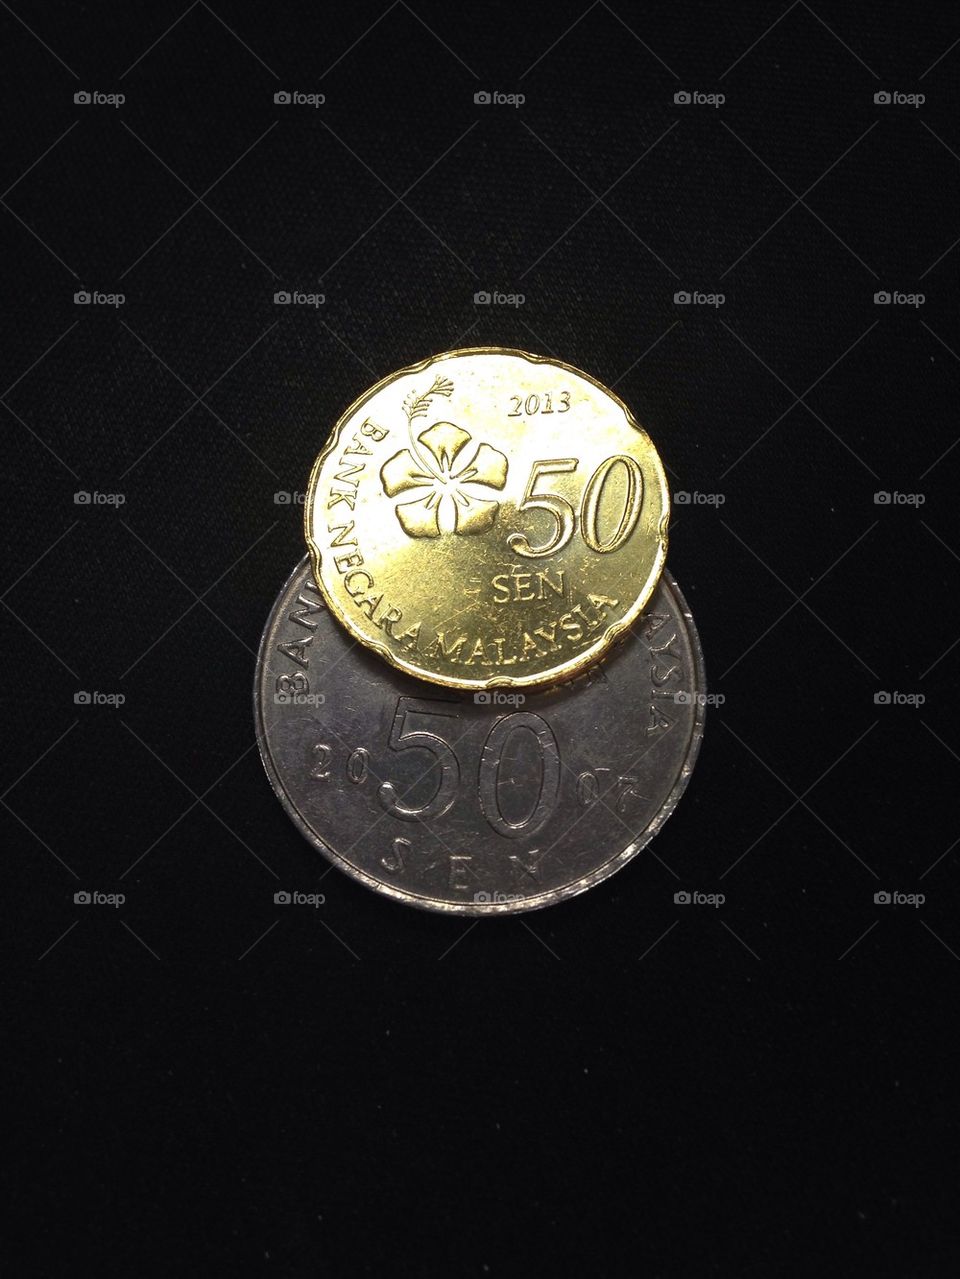 50 cent coin evolution